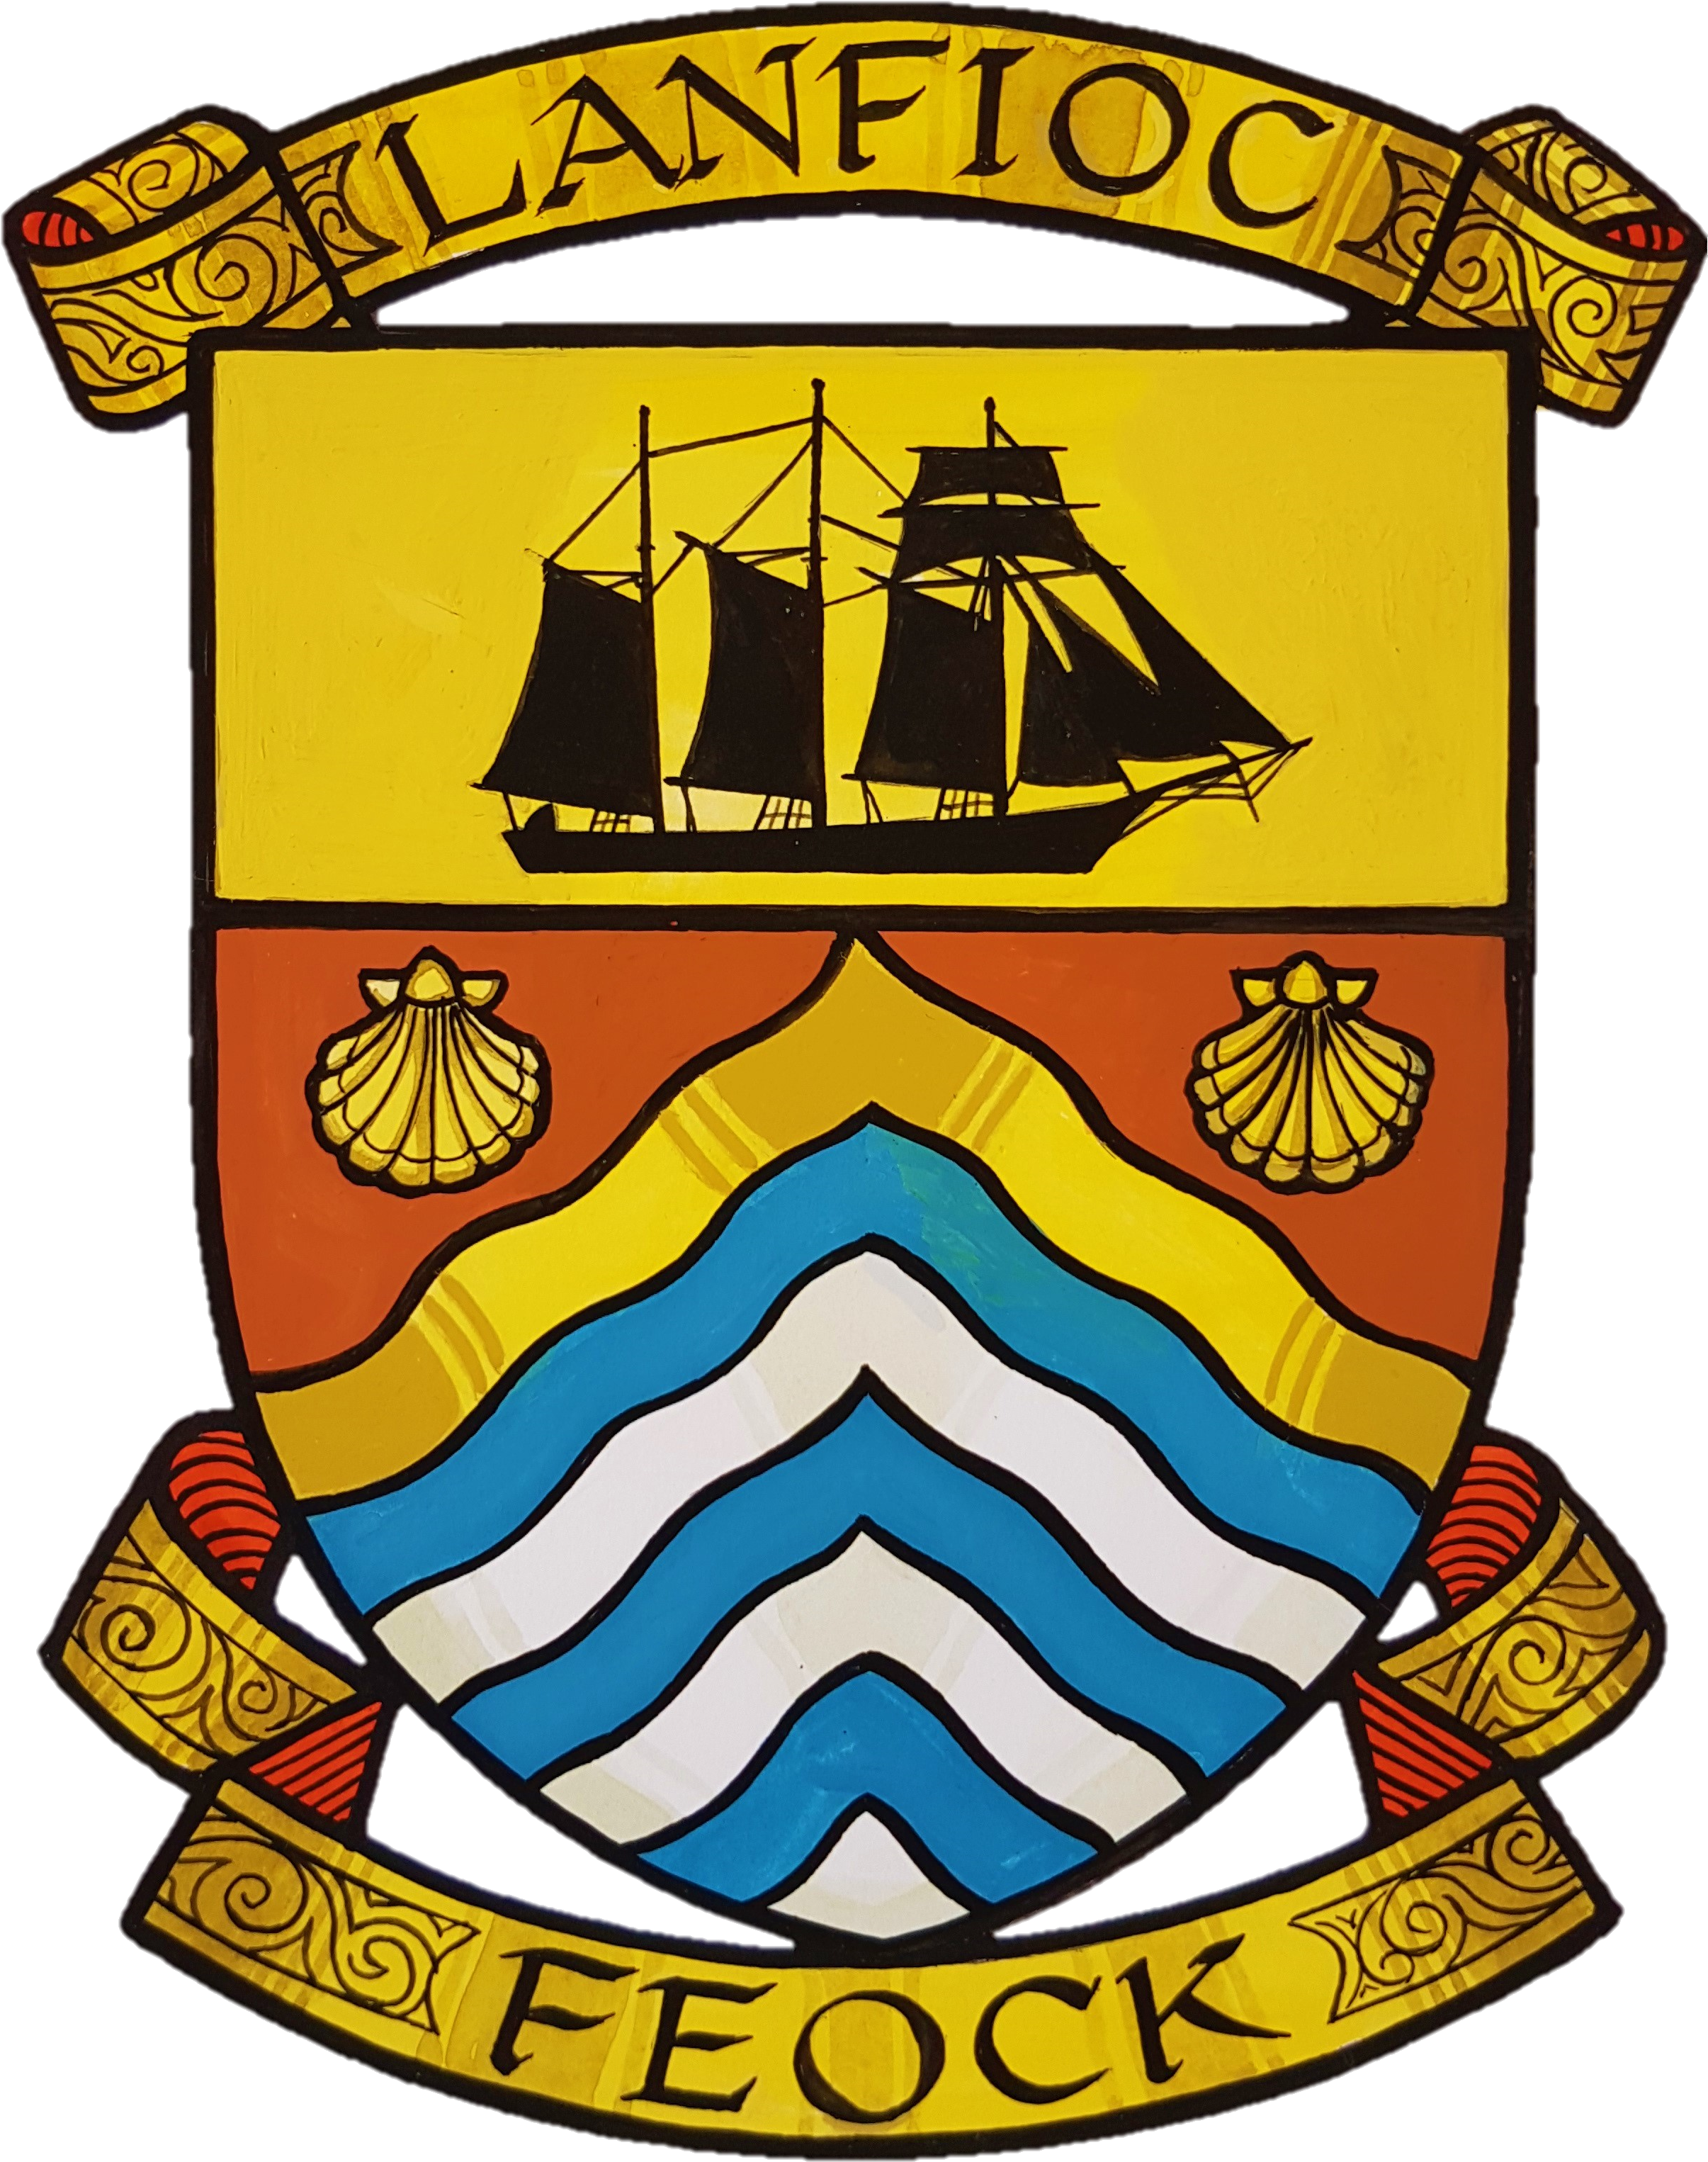 Feock Parish Council (2432x3152)